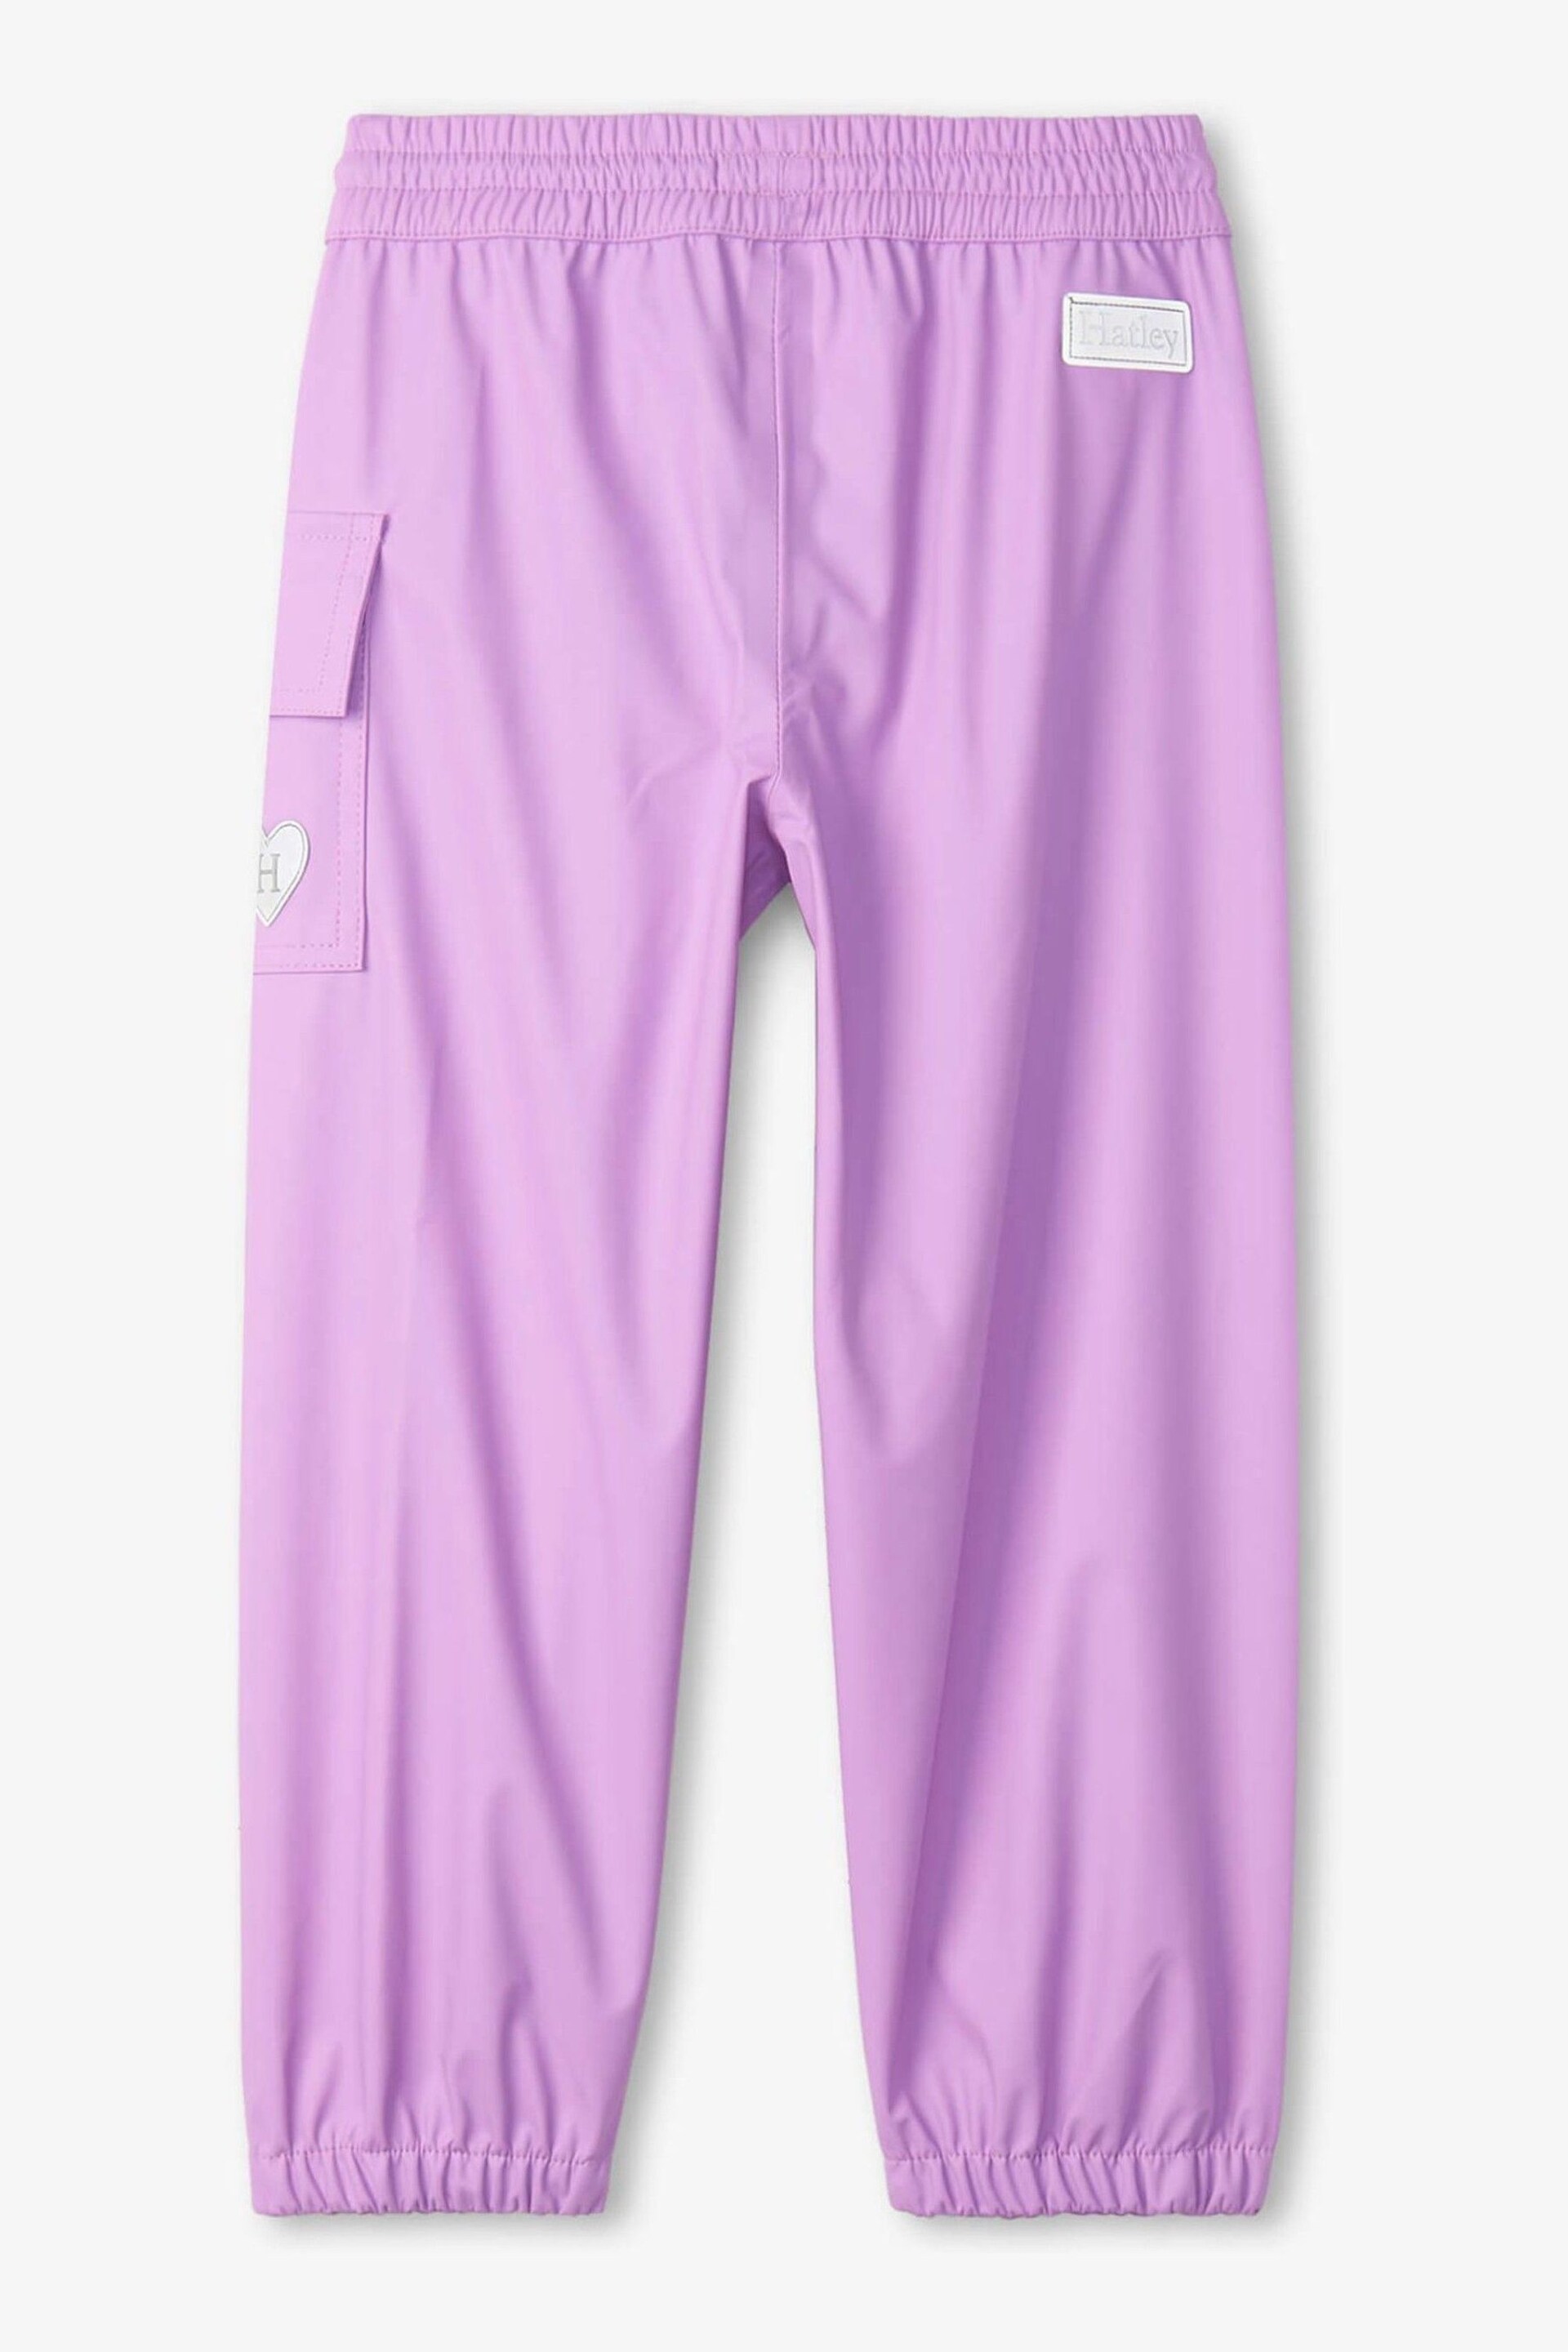 Hatley Purple Splash Trousers - Image 2 of 6